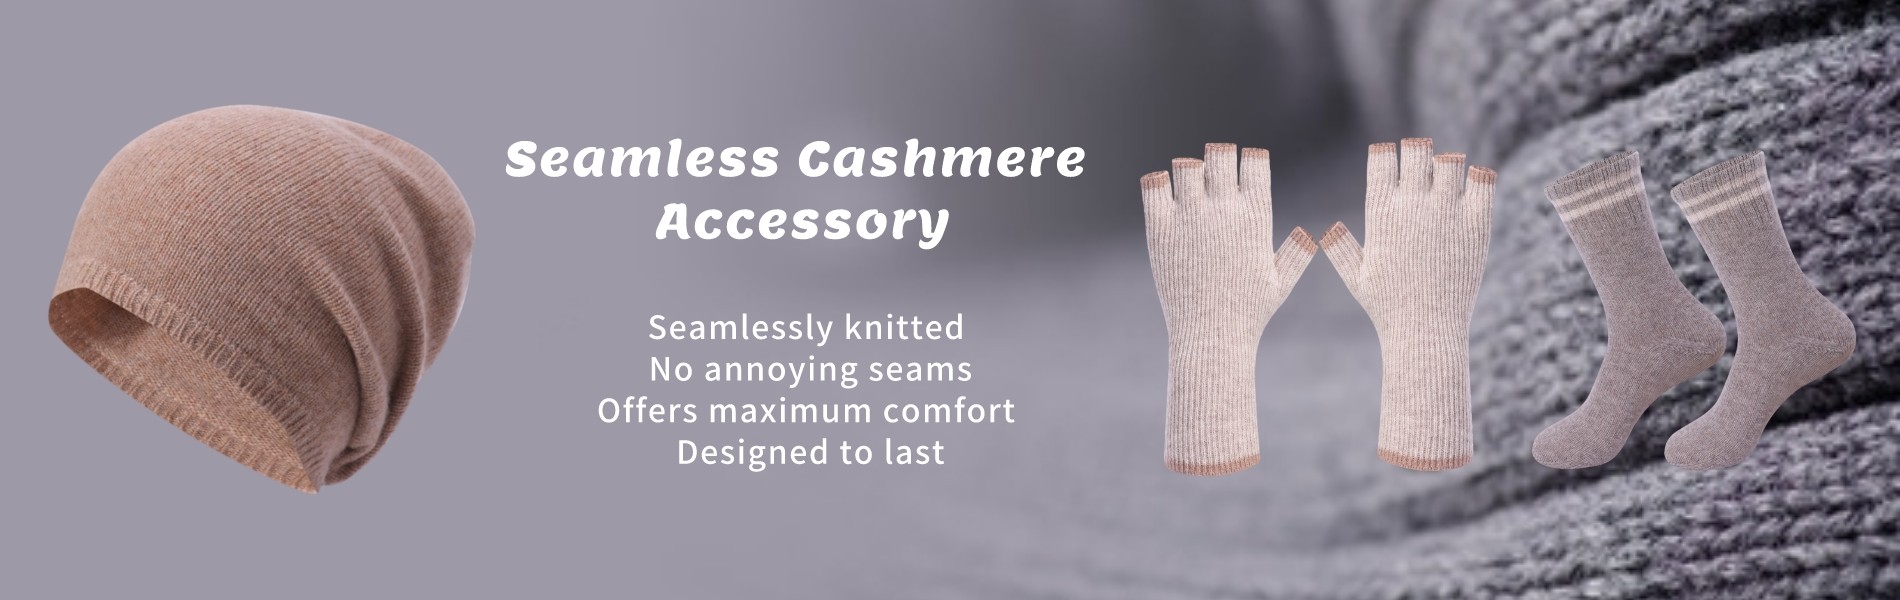 Seamless cashmere accessory